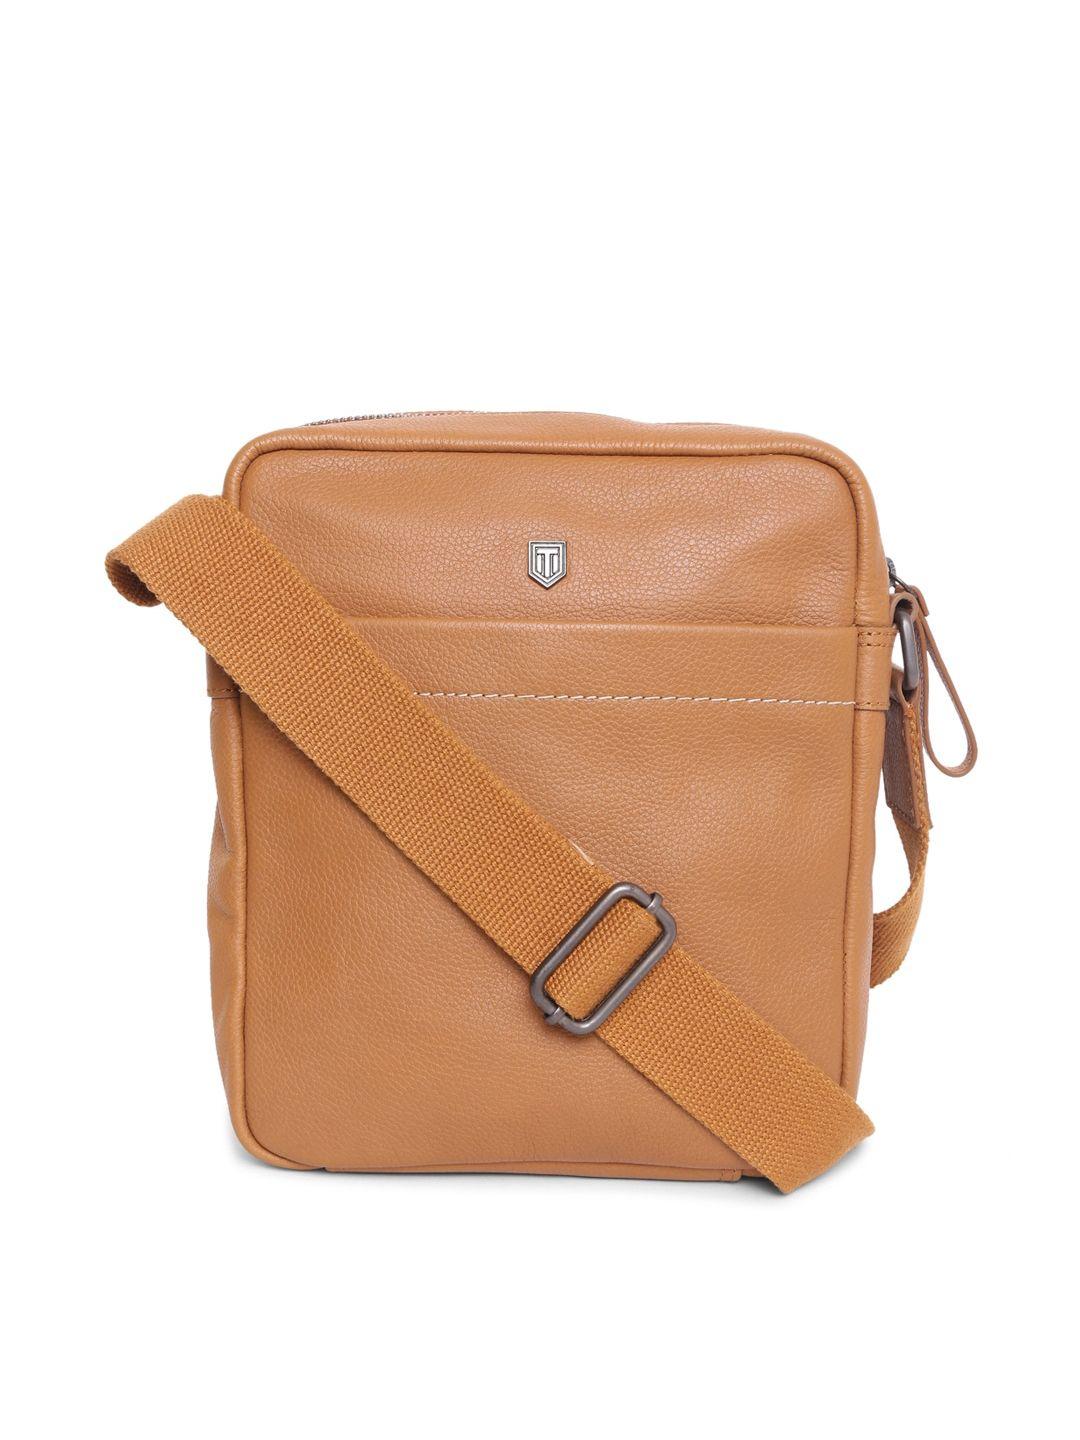 tom lang london unisex tan brown leather messenger bag